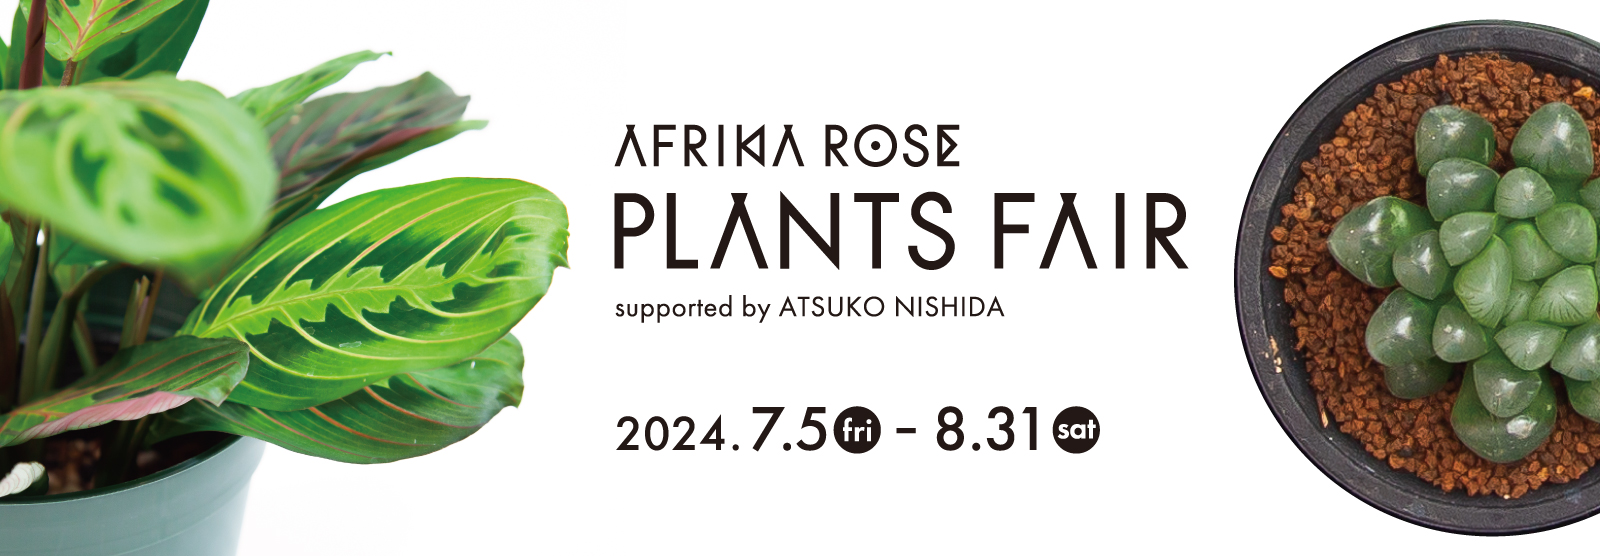 AFRIKA ROSE PLANTS FAIR 2024